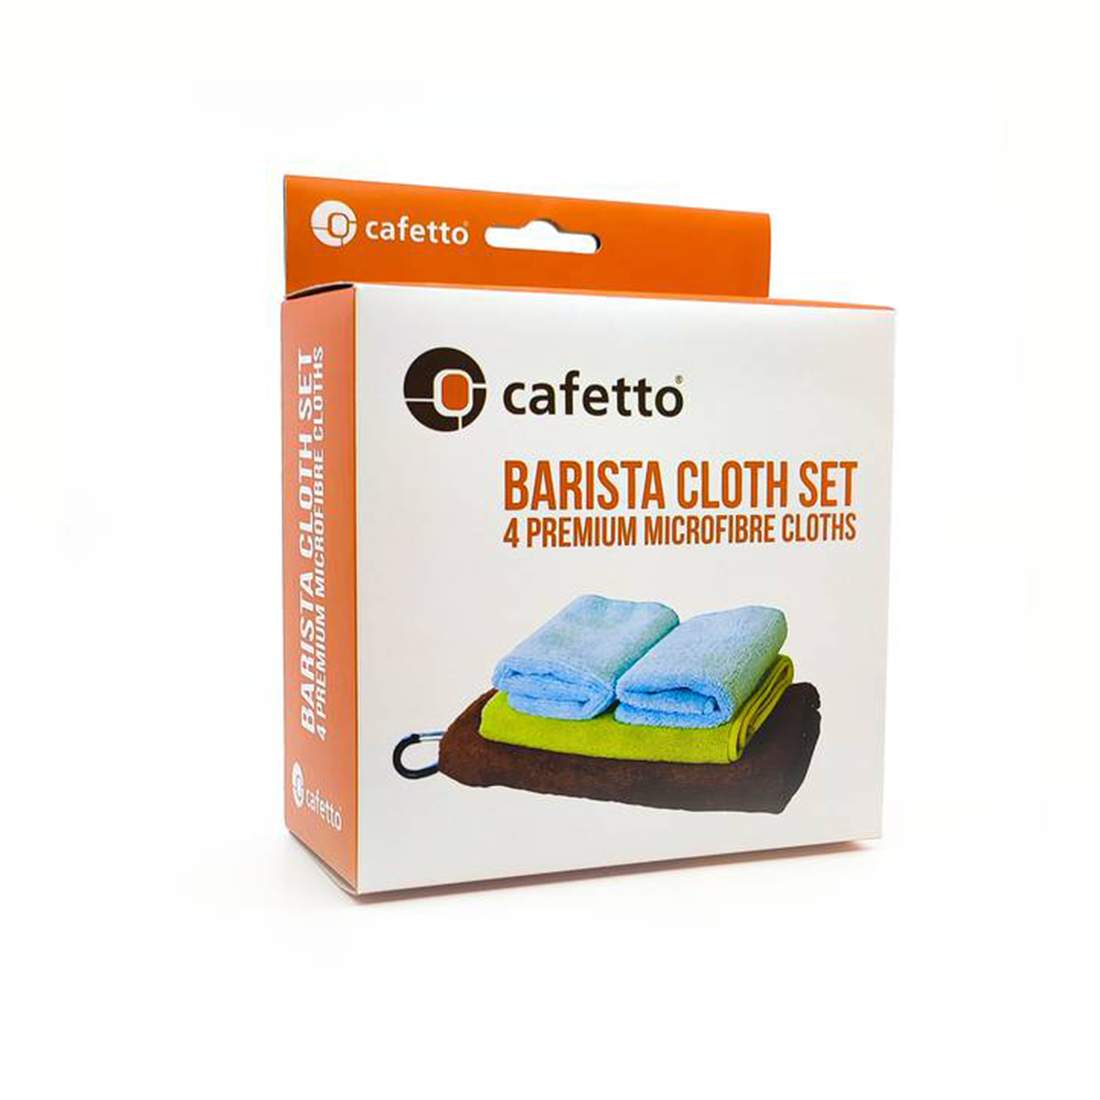 Cafetto-Barista-cloths-set